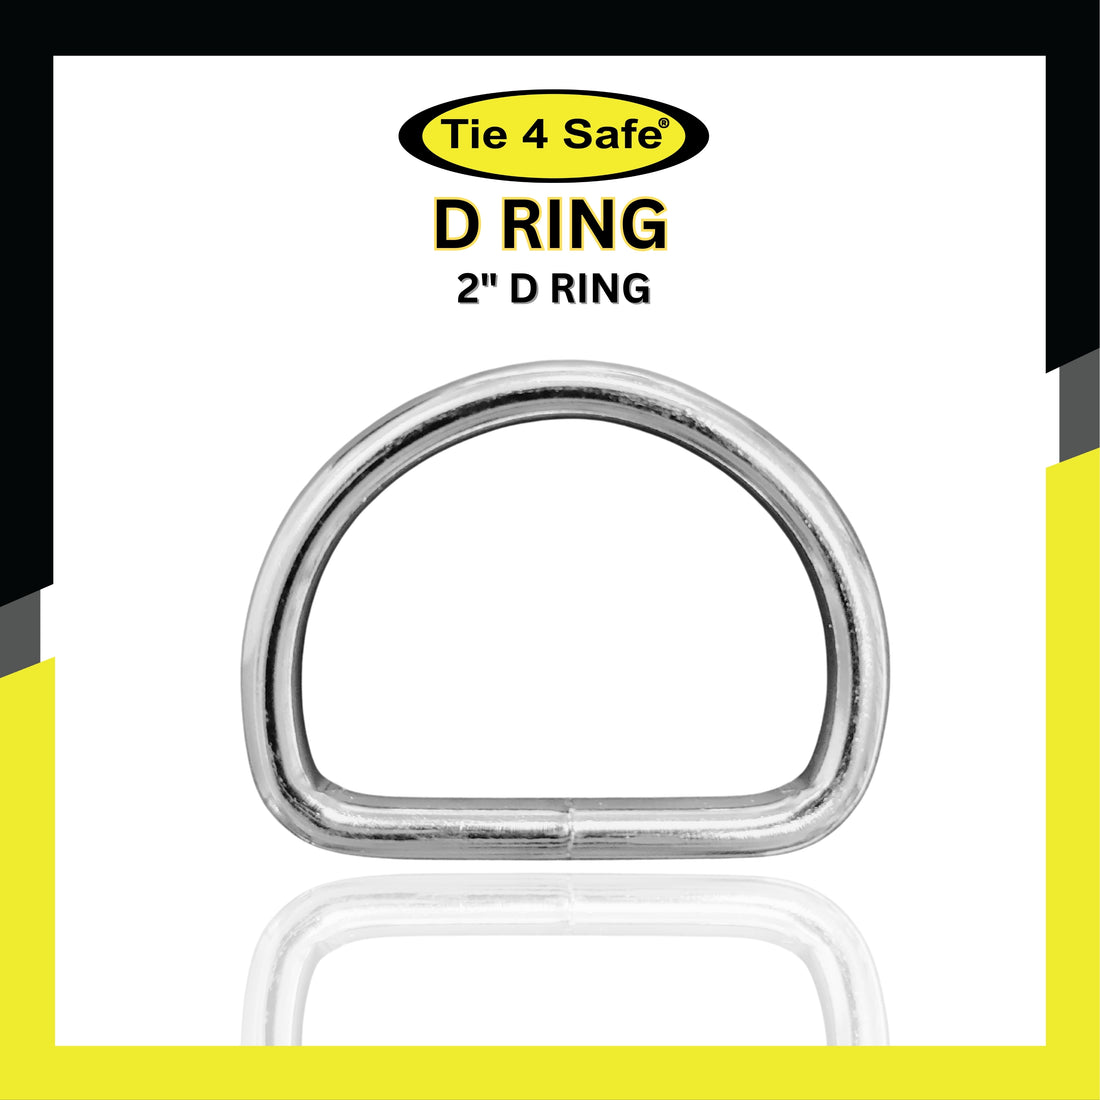 2" D Ring